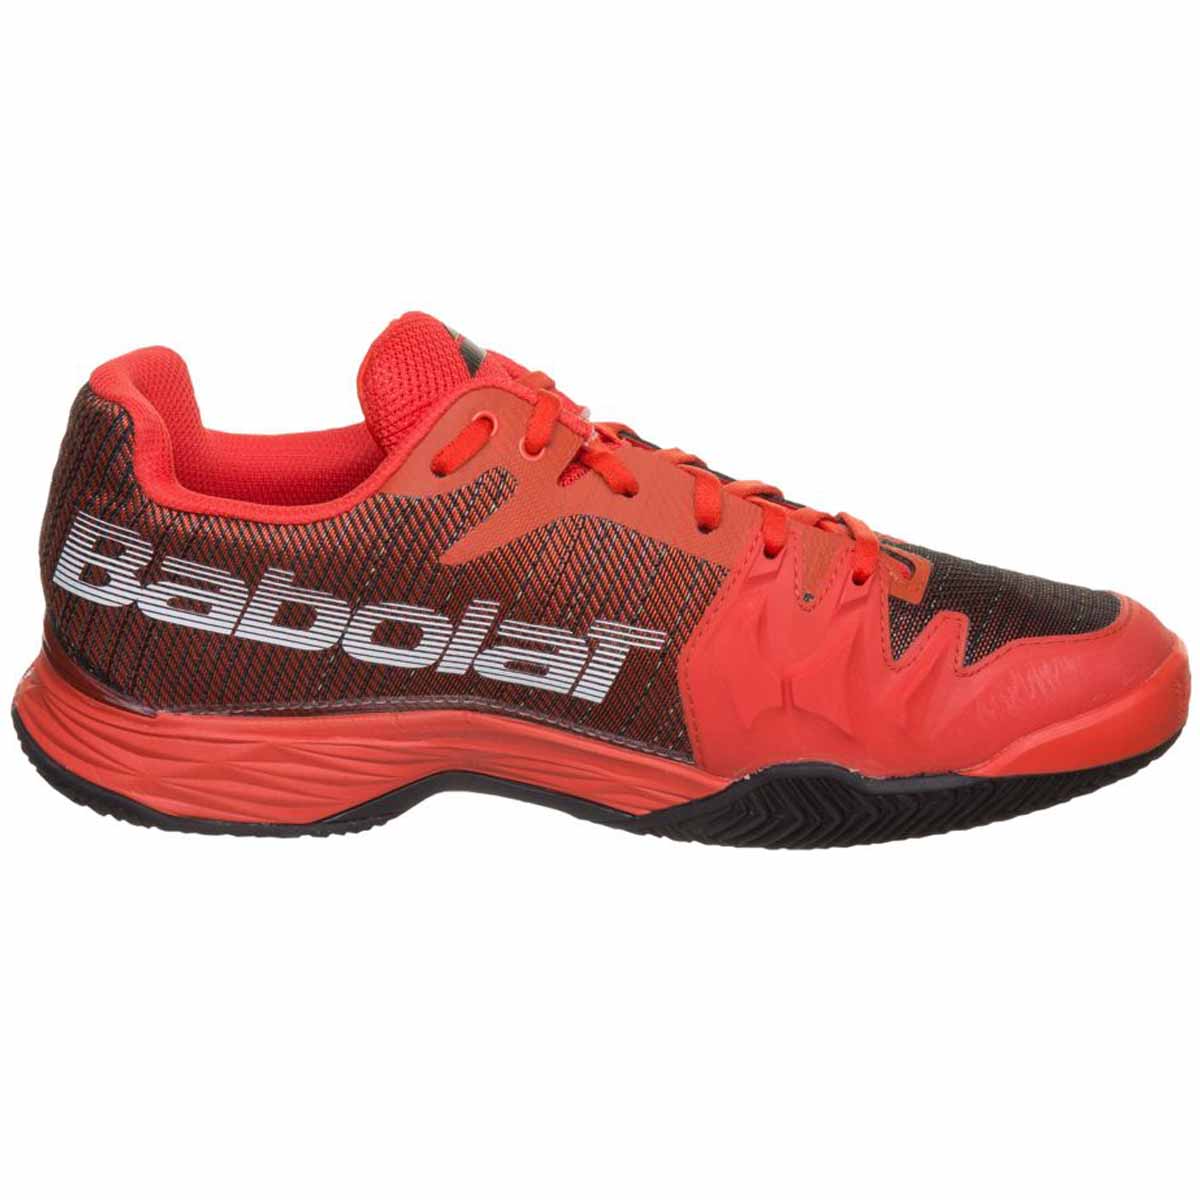 Buy Babolat Jet Mach II All Court Tennis Shoes (Orange/Black) Online